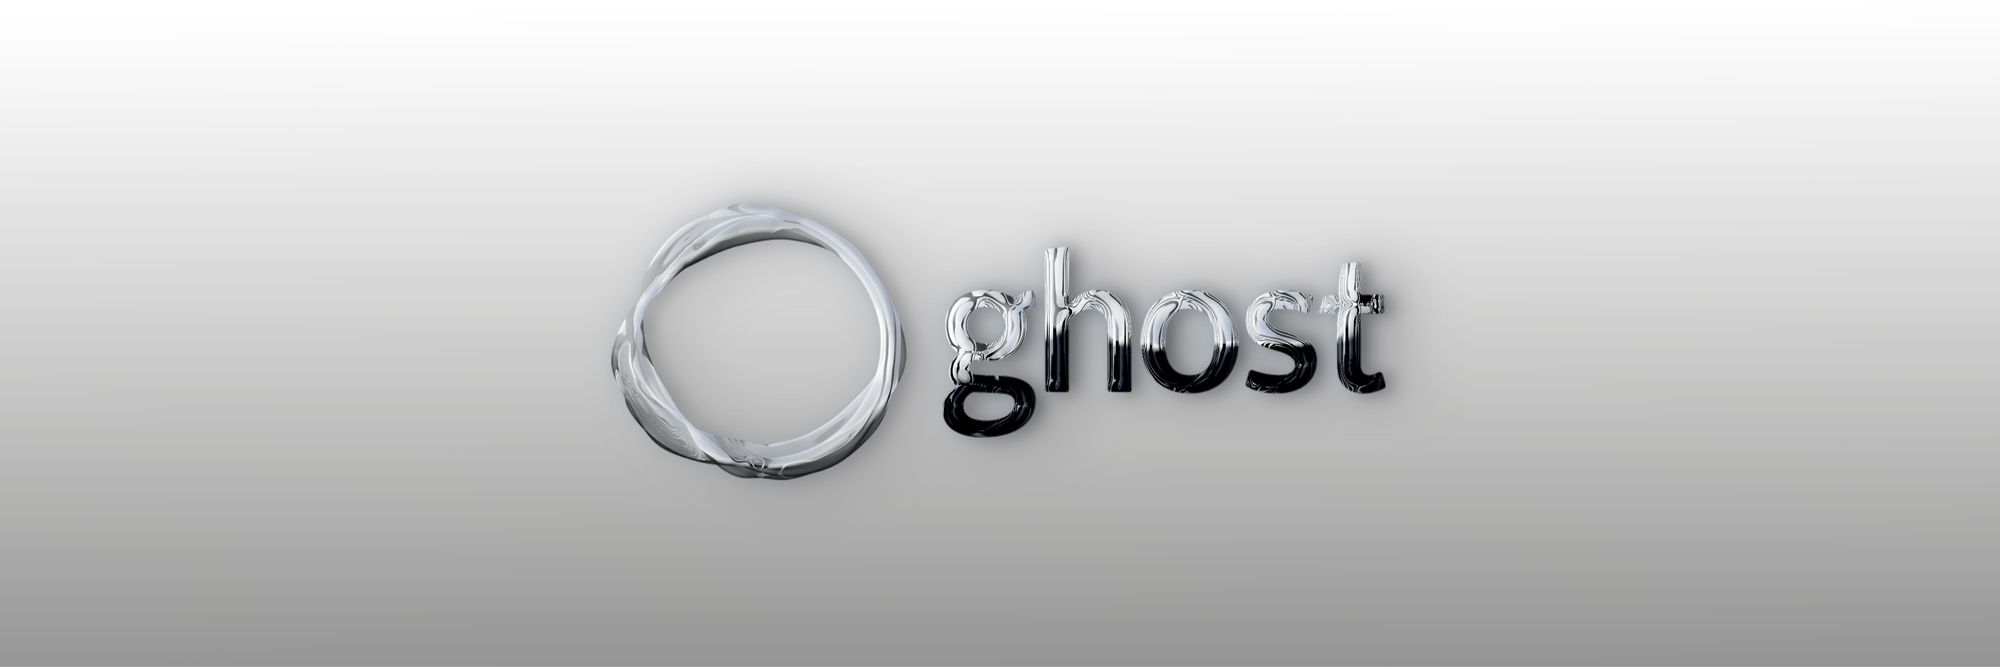 ghost blog logo